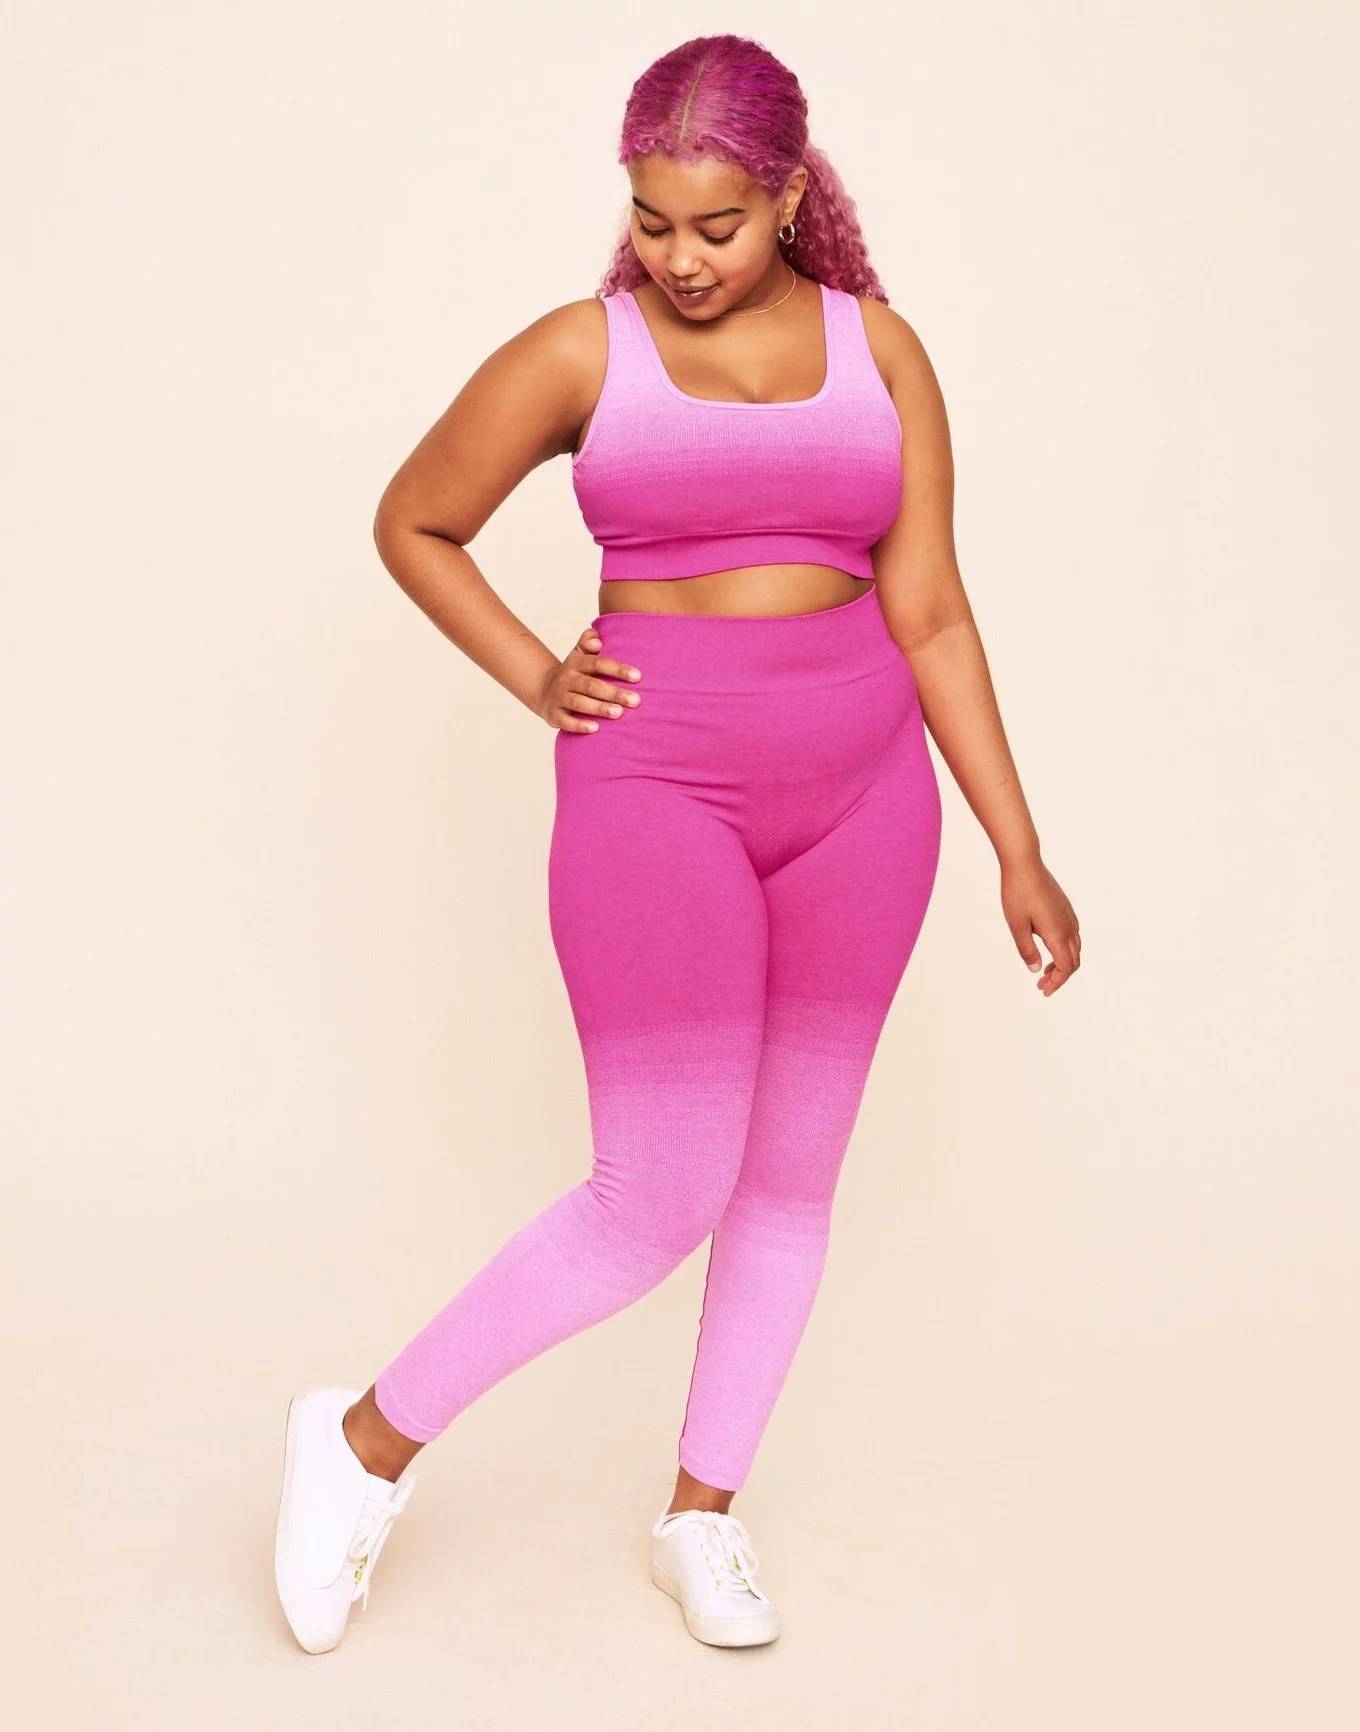  Womens Polyester Plus Size Leggings Light Pink 3X